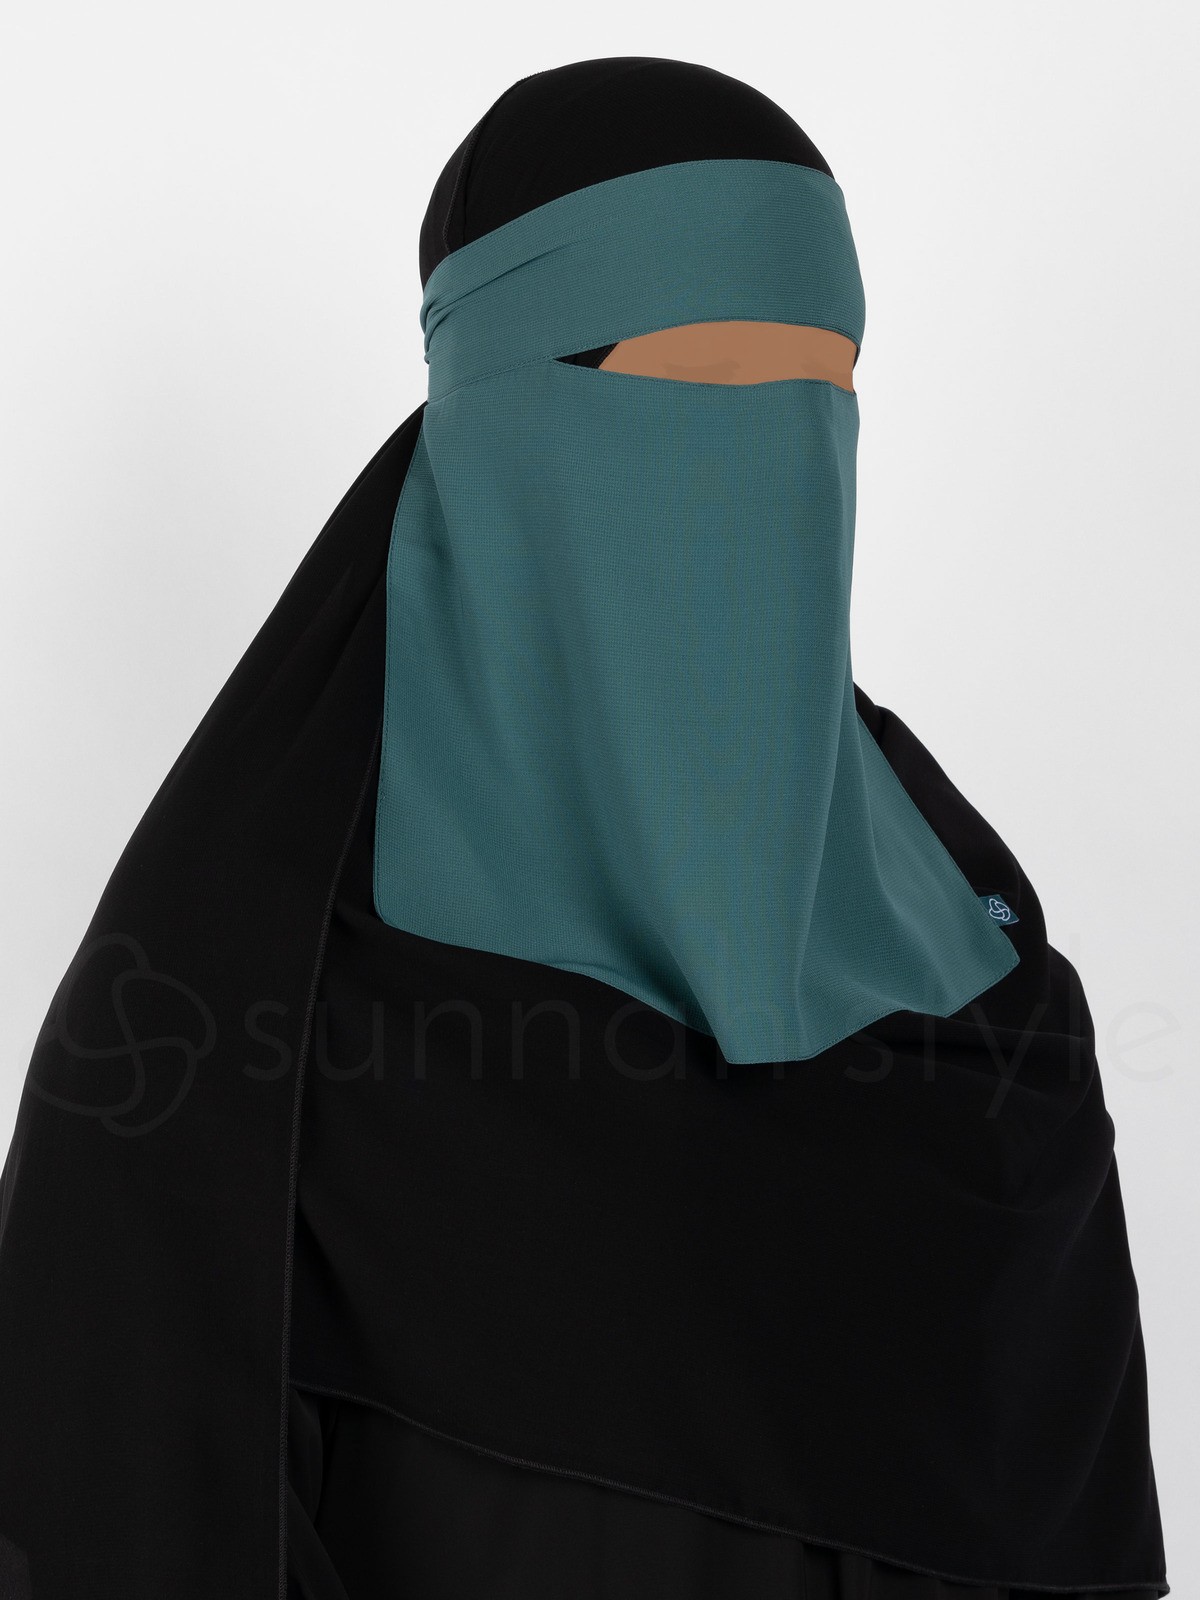 Sunnah Style - Short One Layer Niqab (Eggplant)